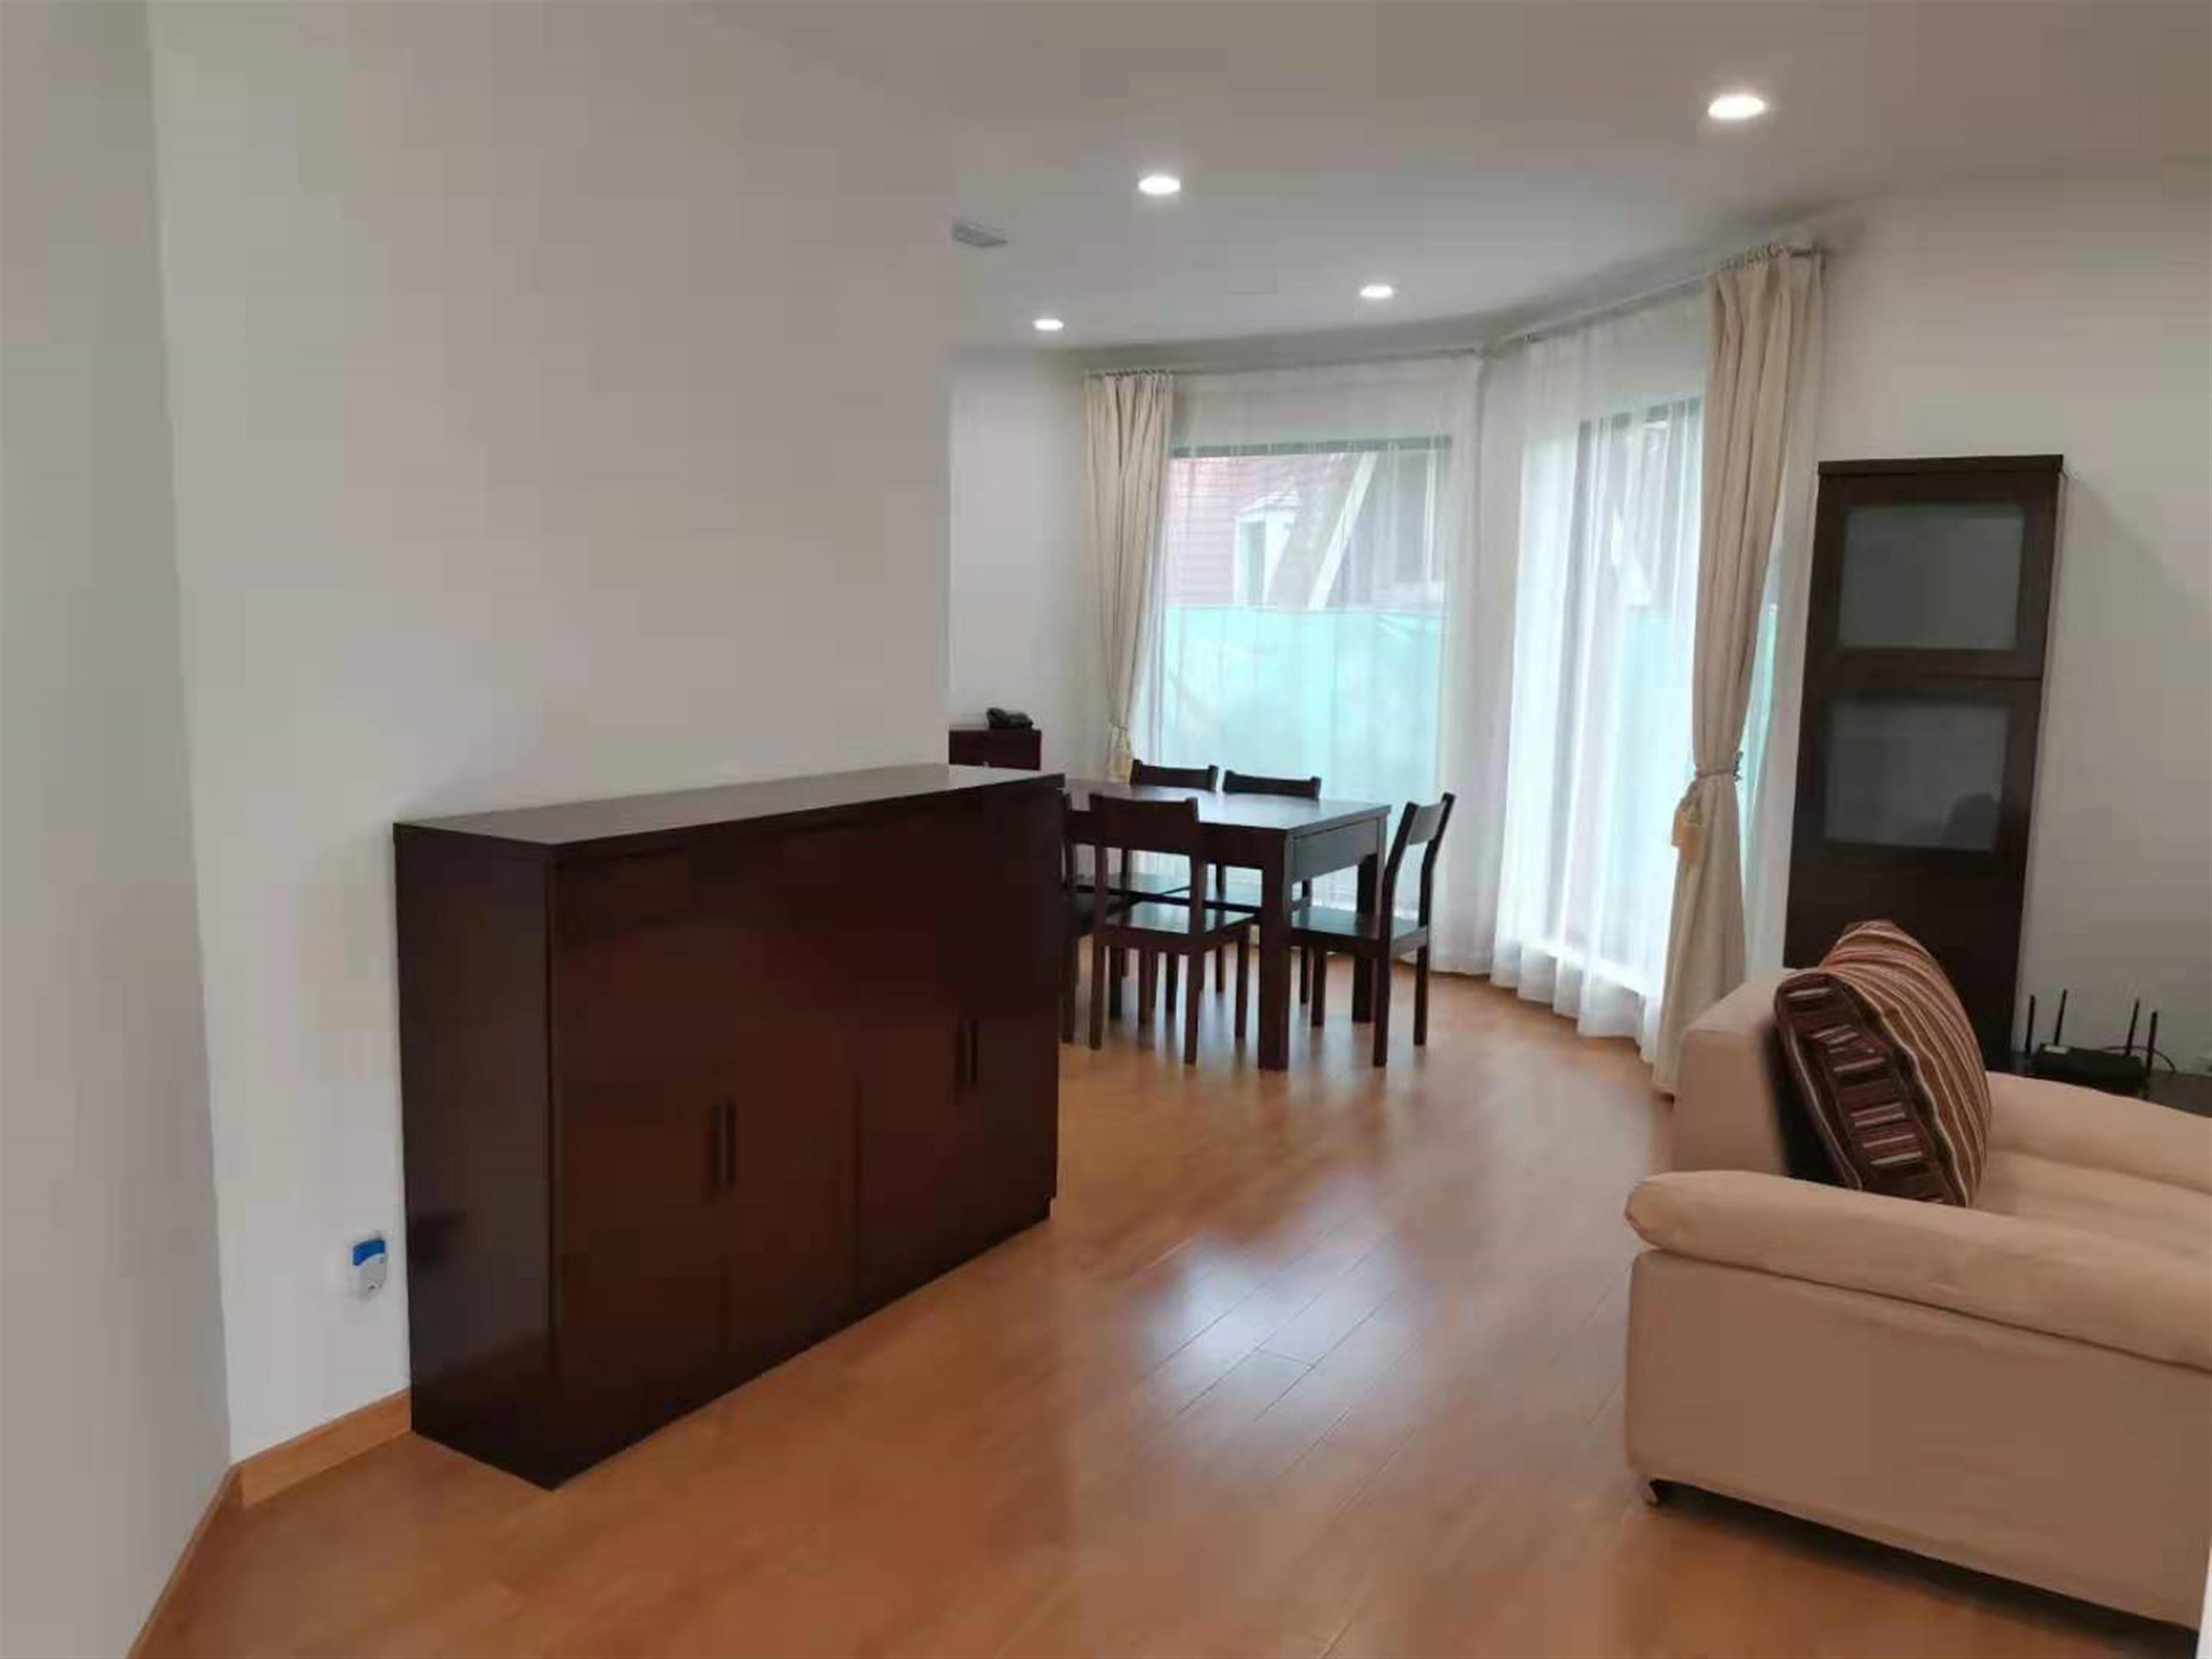 Open living area Bright Spacious Convenient 4BR Villa nr LN 10 for Rent near Shanghai Zoo